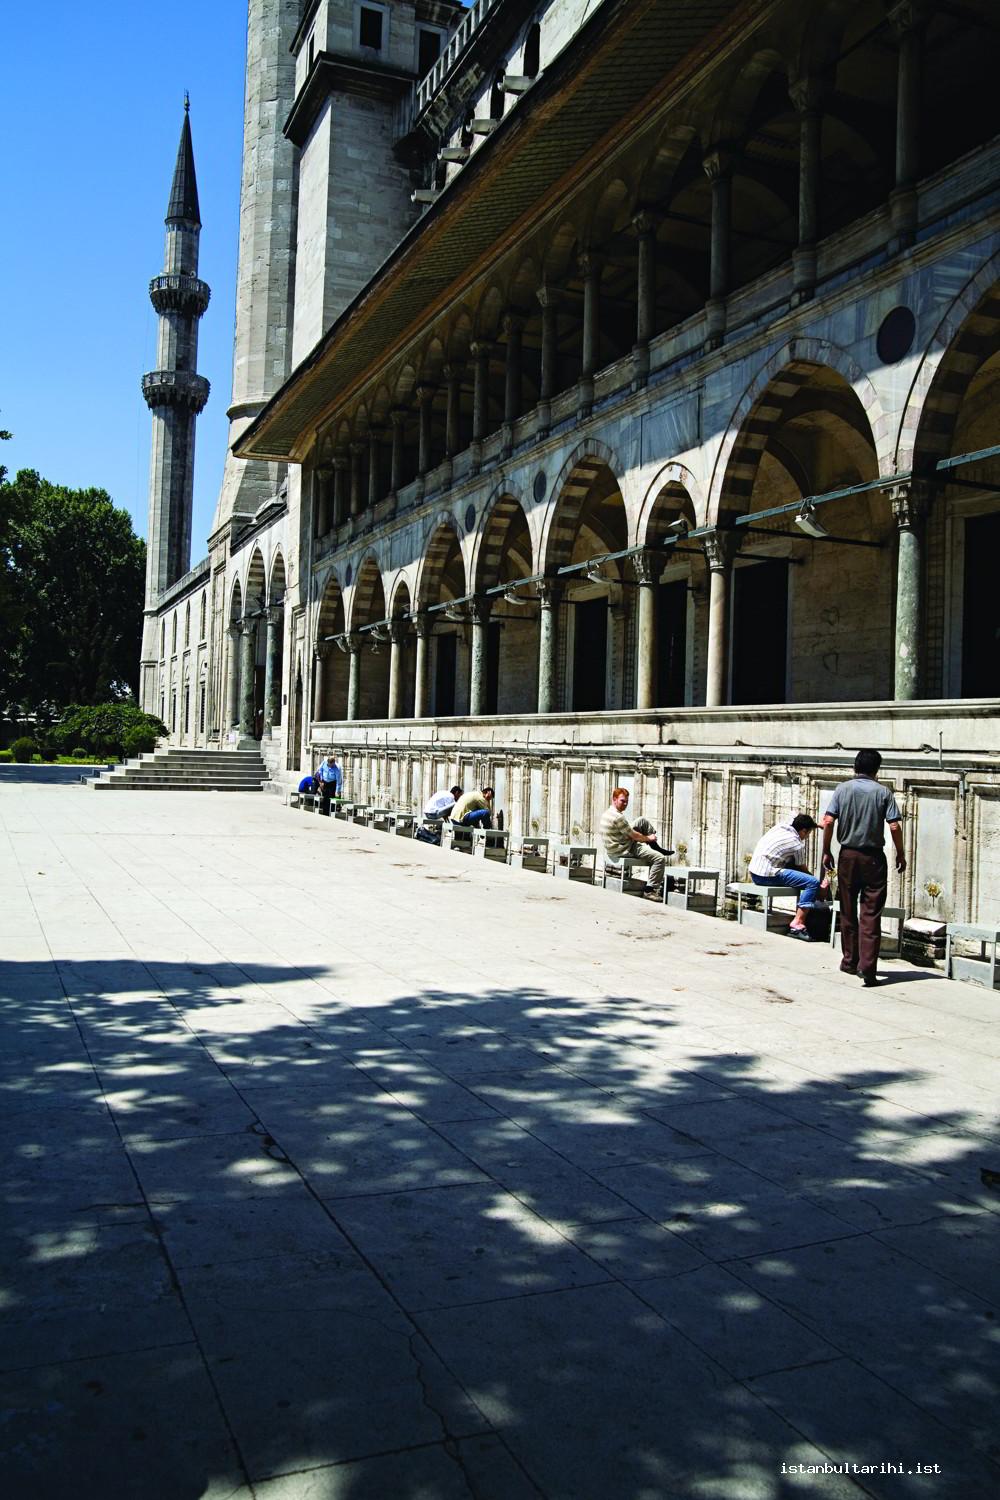 6- Süleymaniye Mosque